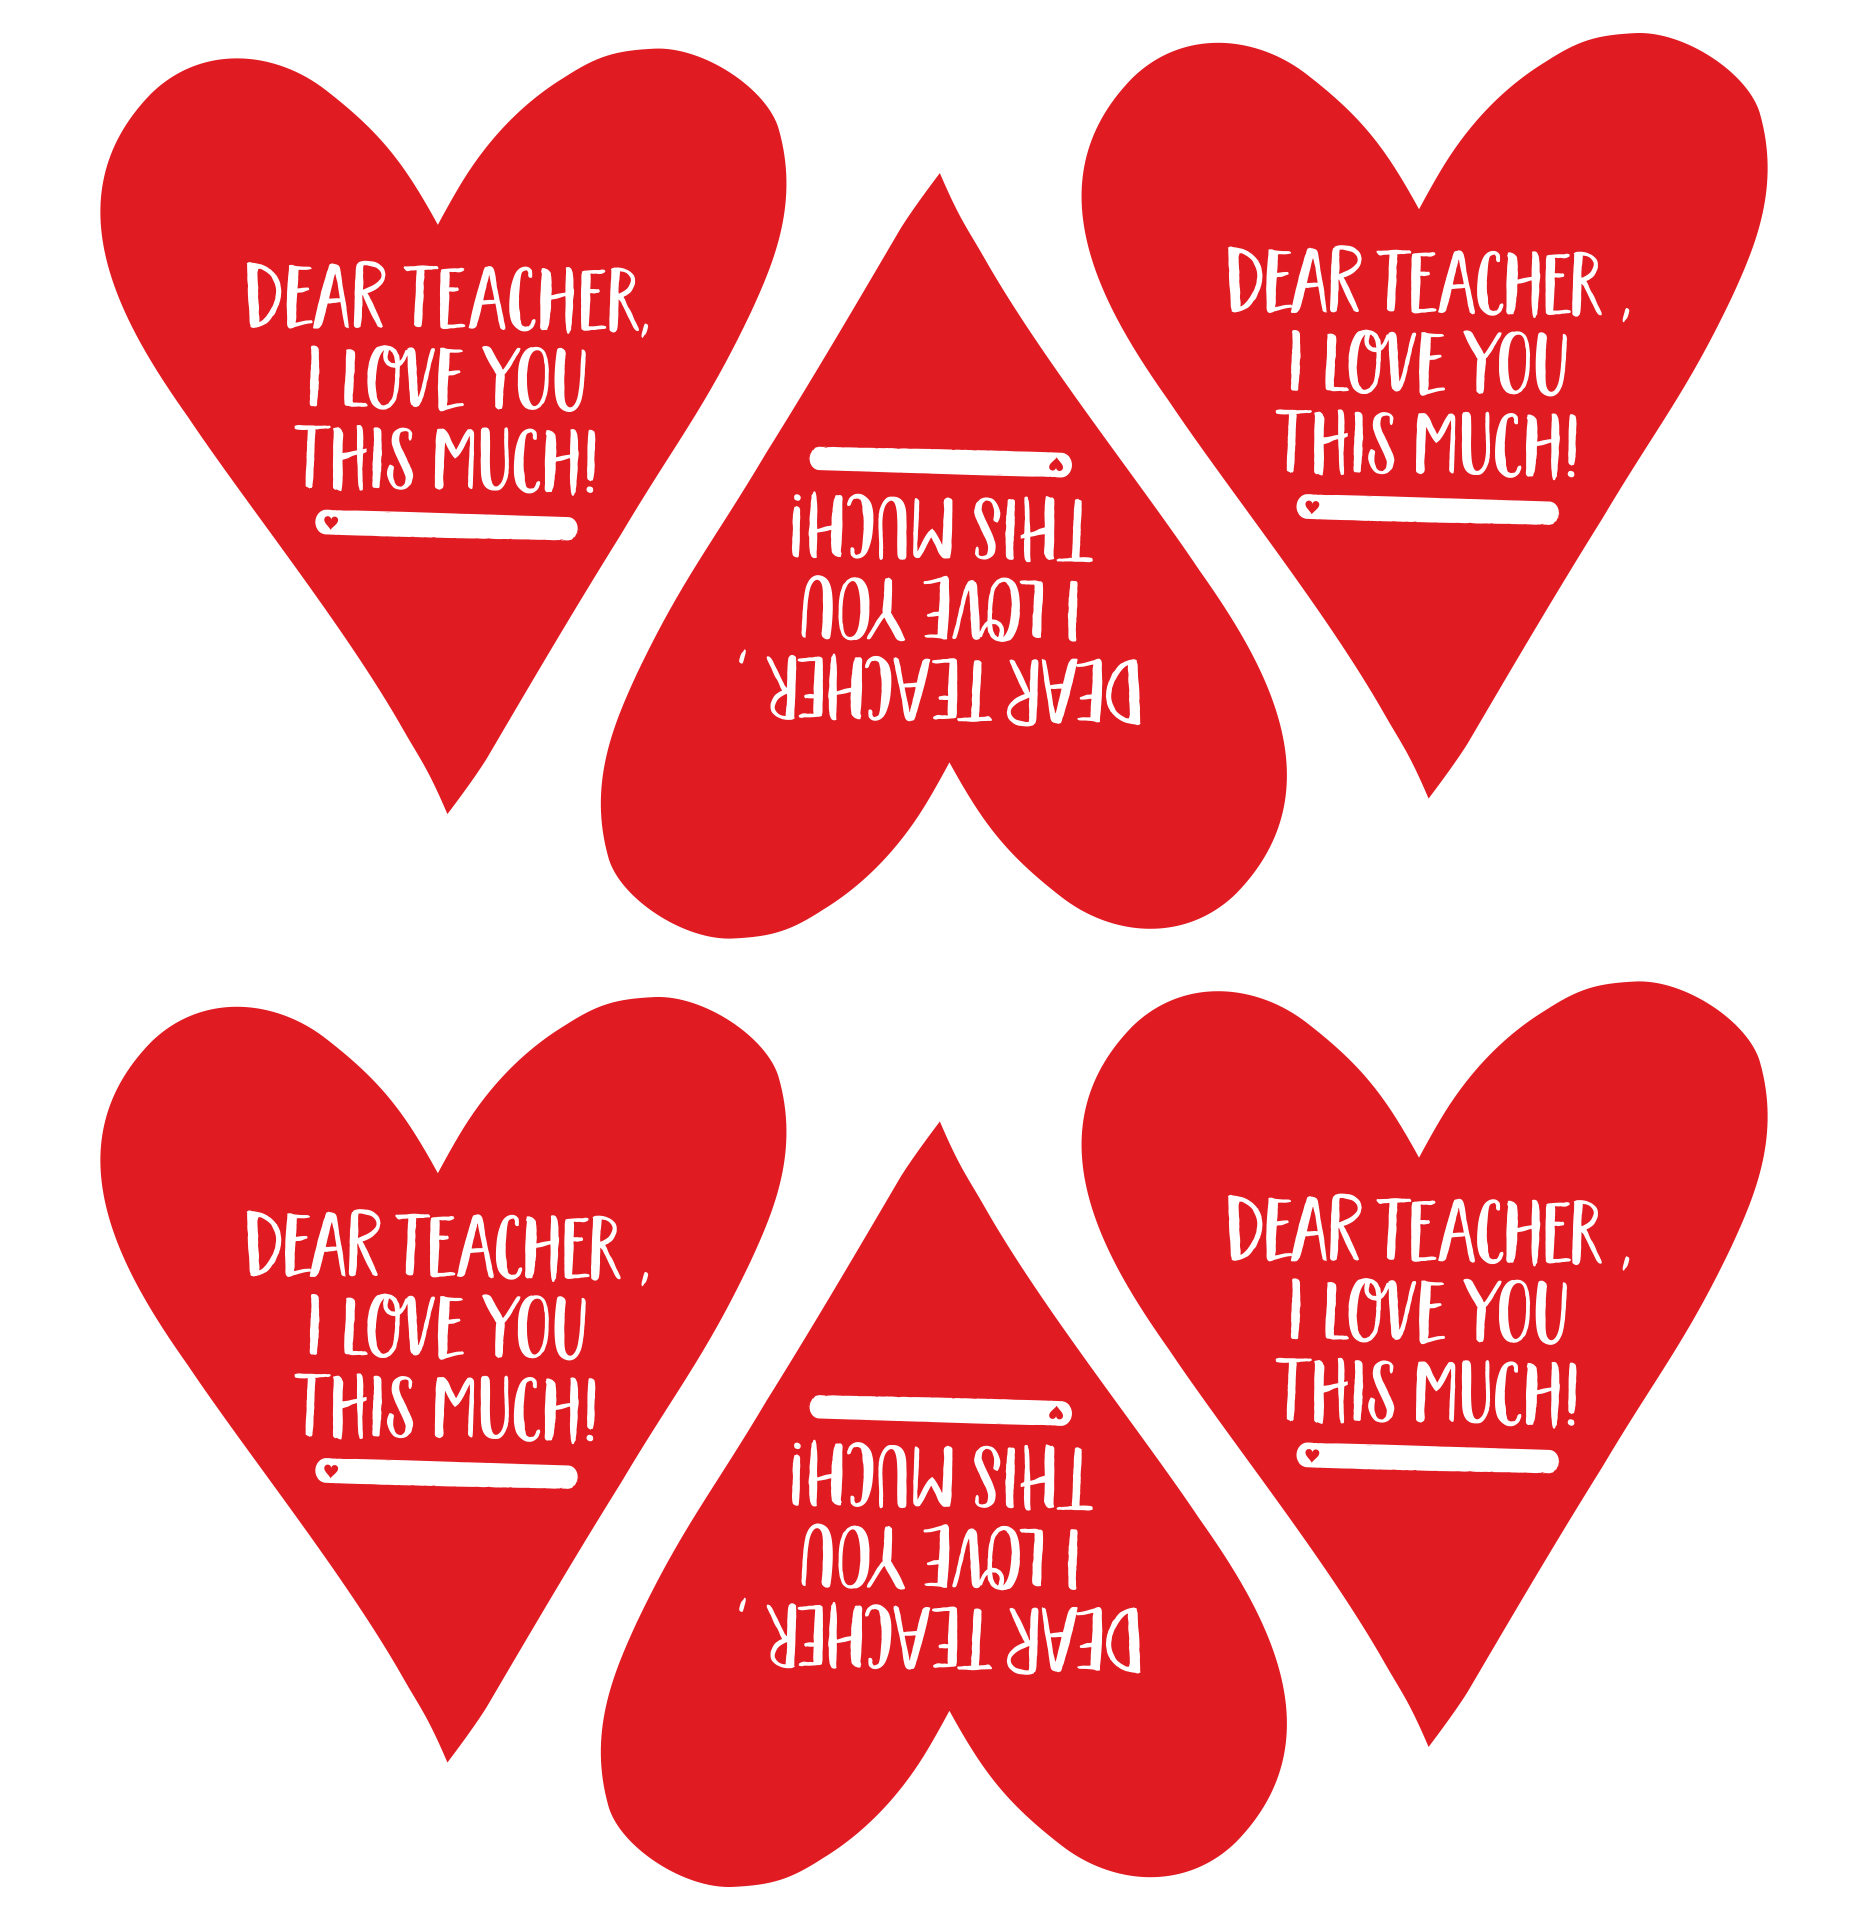 Free Printable Teacher Valentine Cards